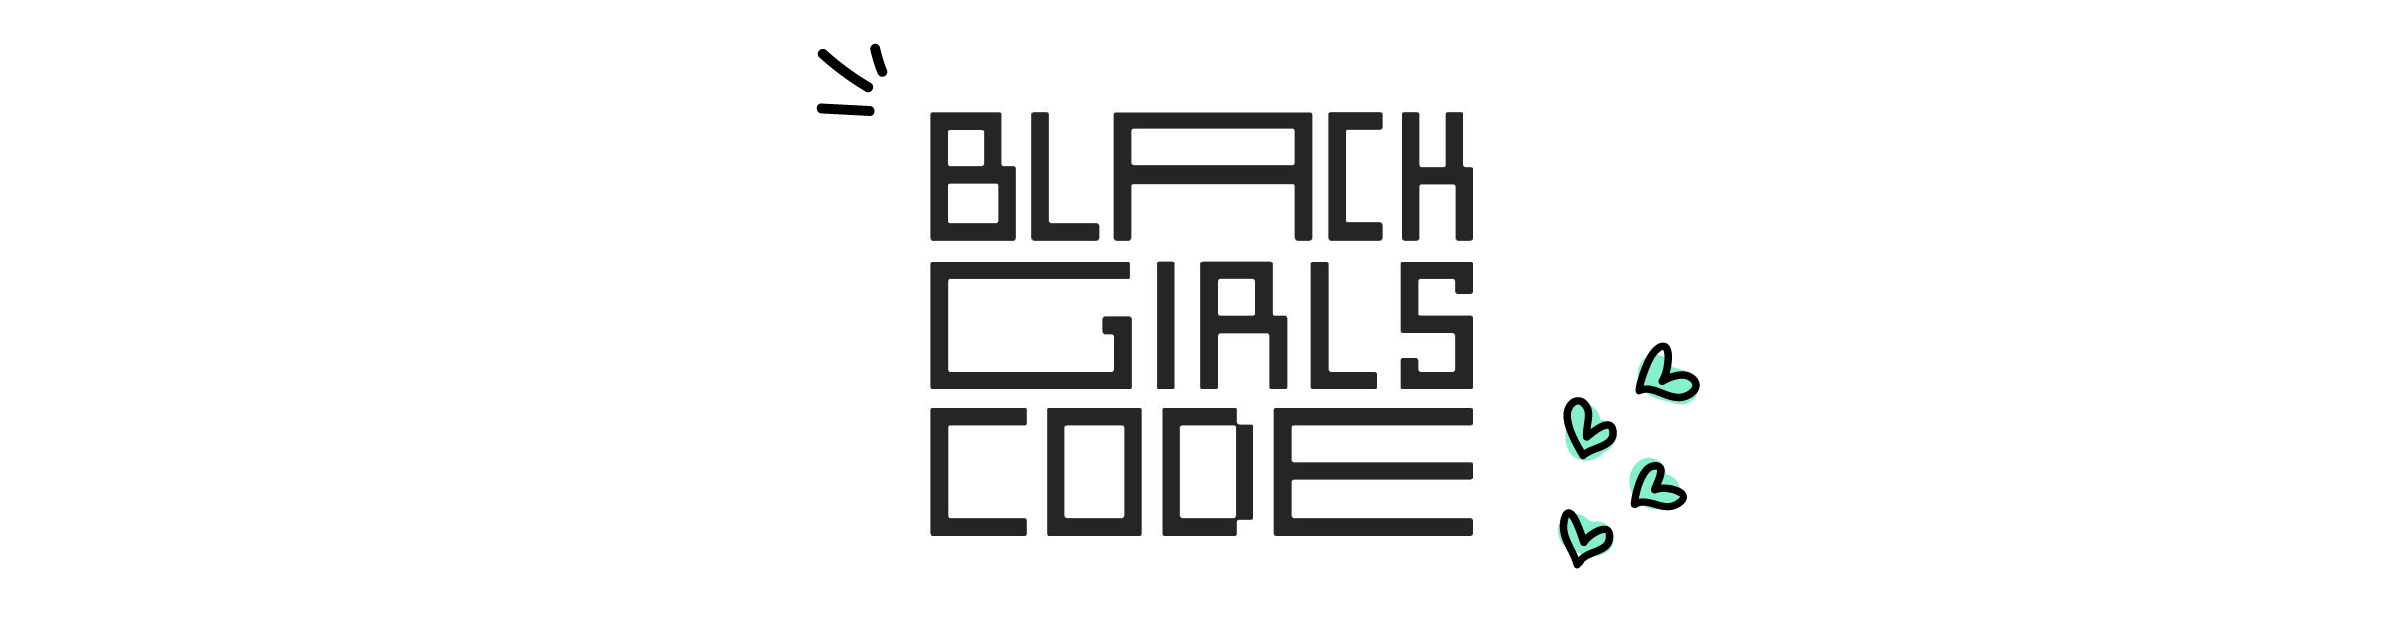 Black Girls Code Logo